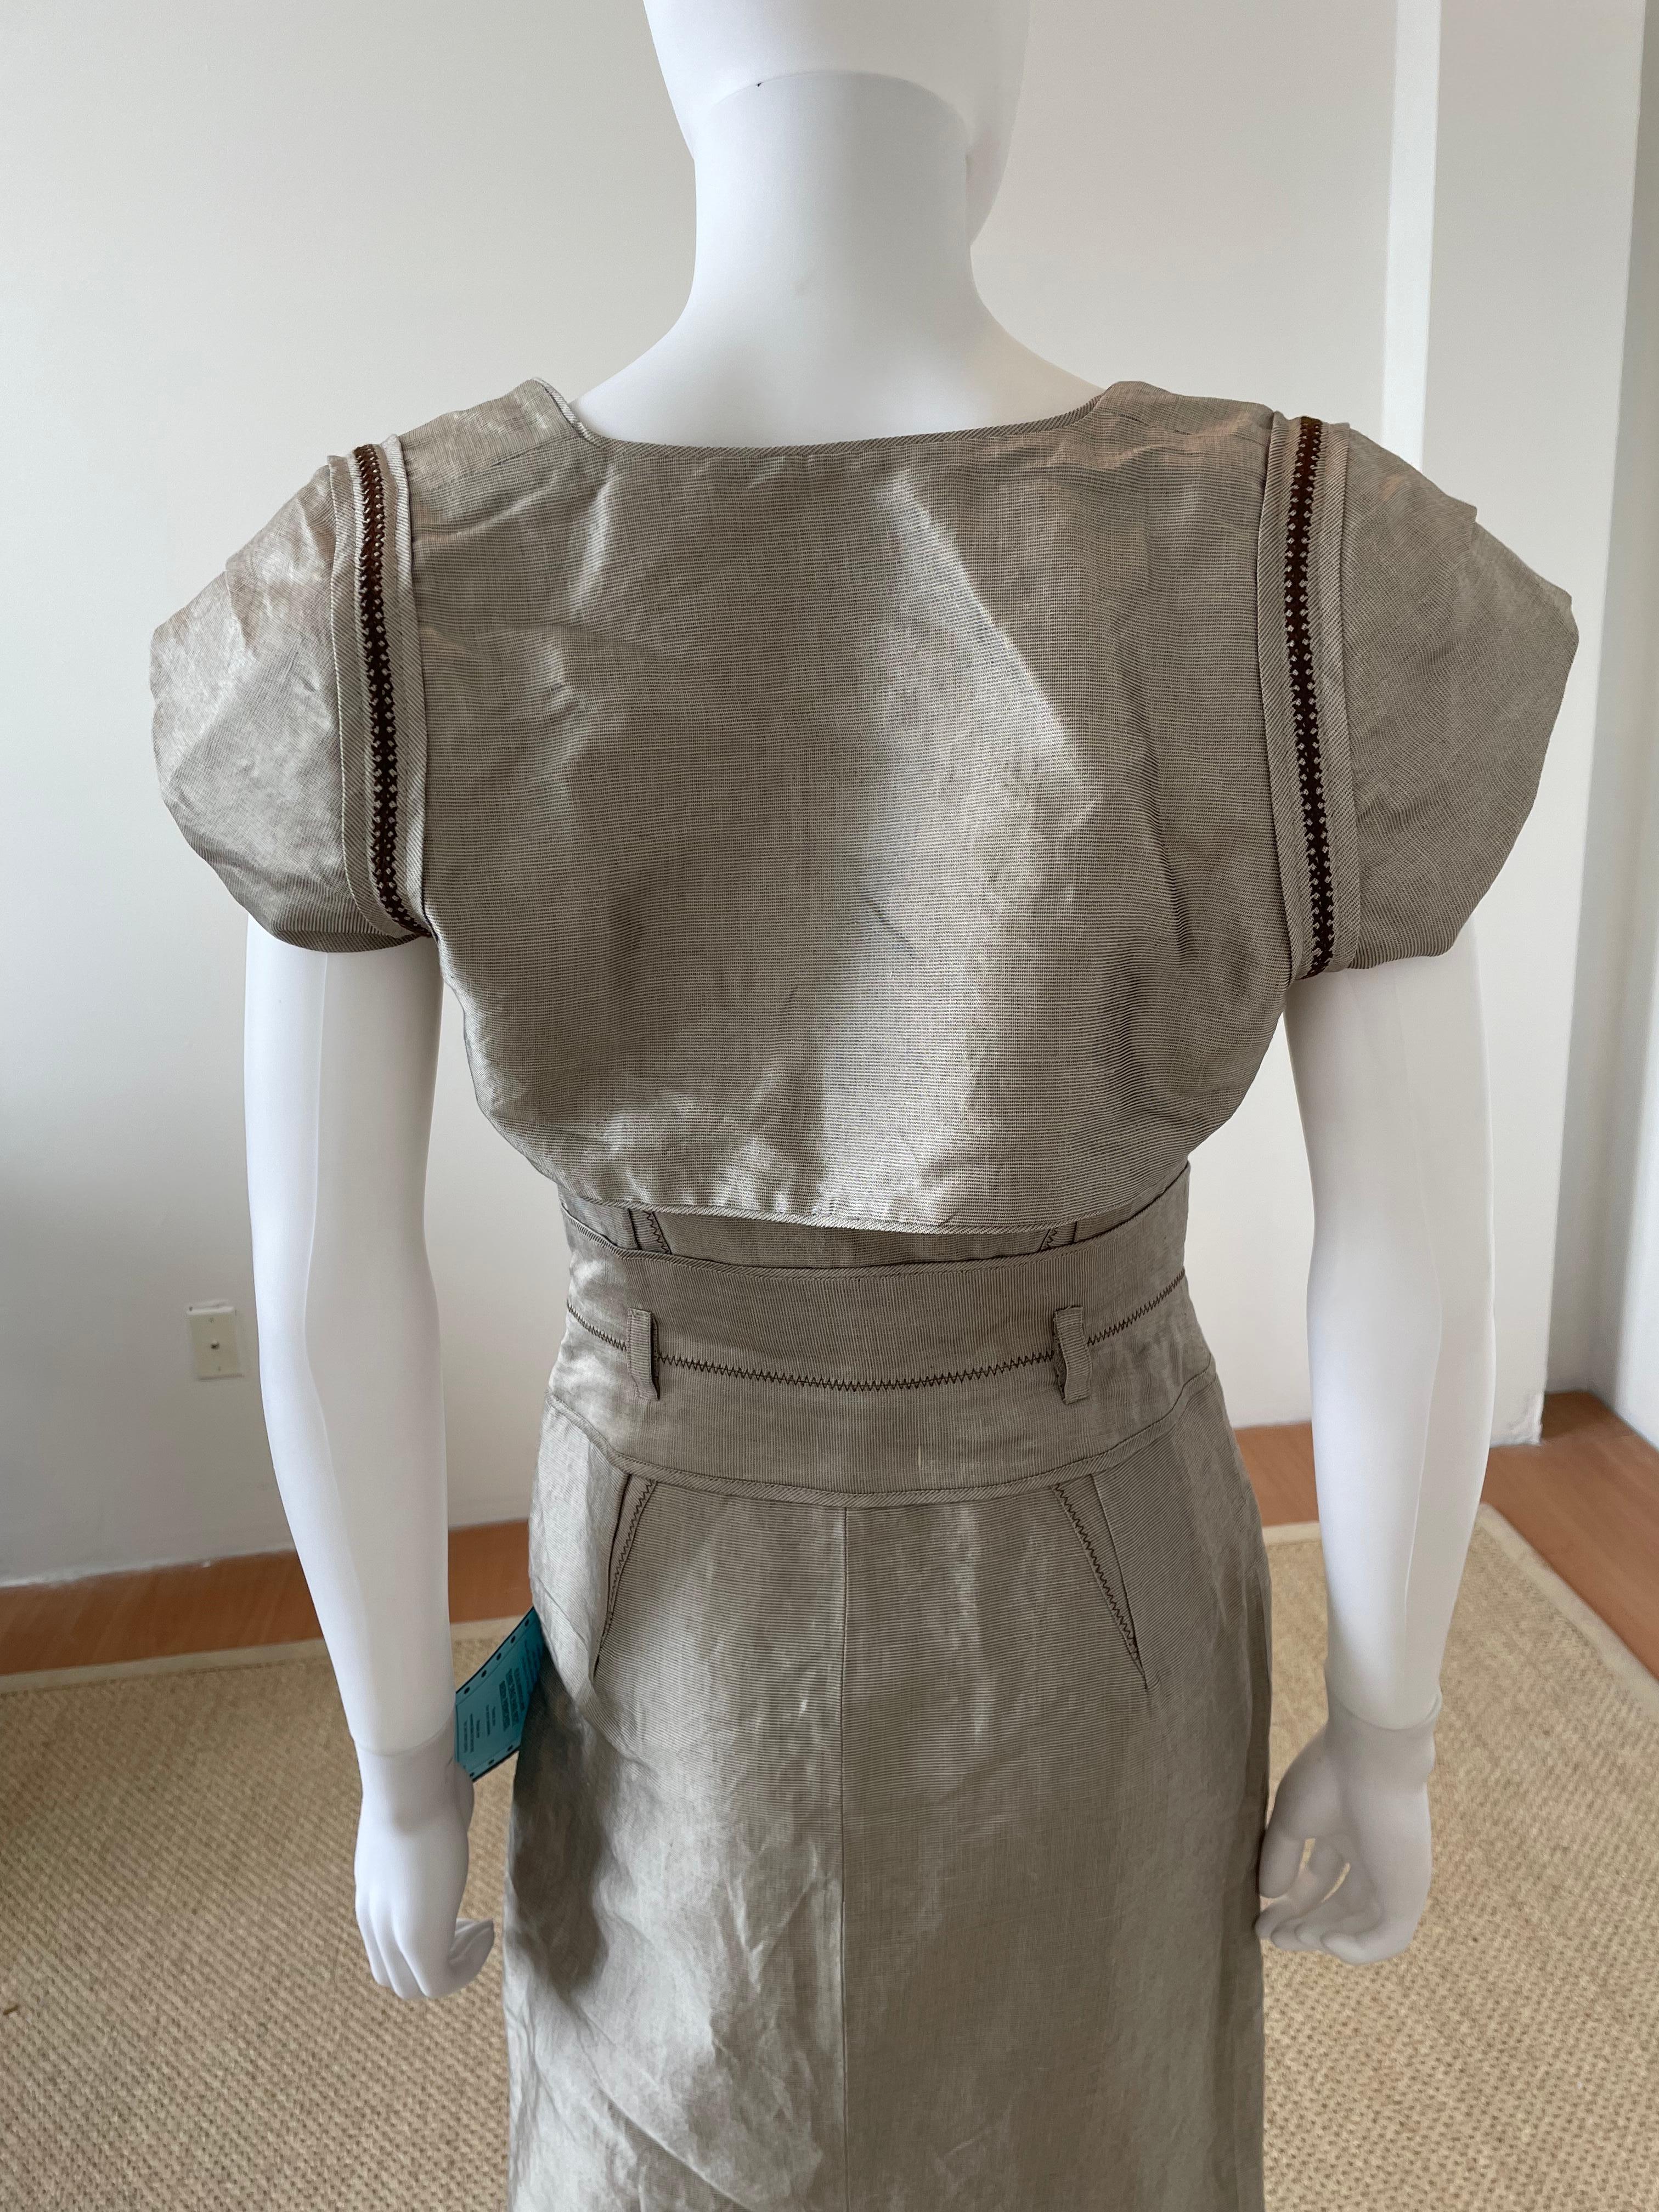 Antonio Berardi Structured Dress with Matching Caplet For Sale 3